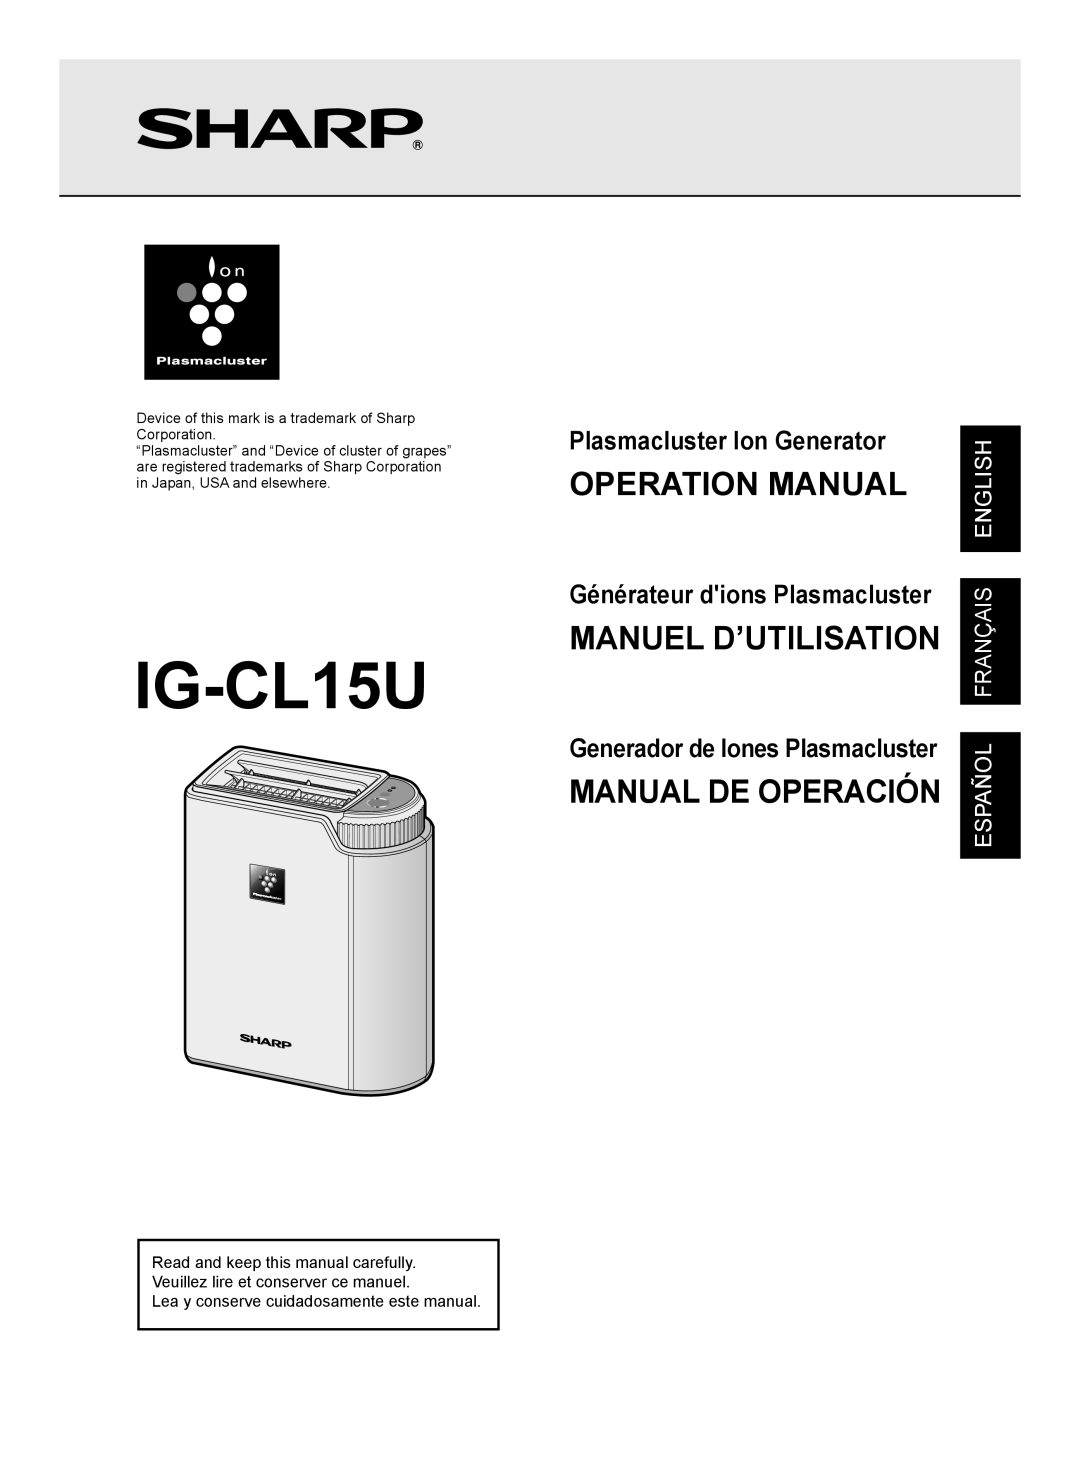 Sharp IG-CL15U operation manual Manuel D’Utilisation, Manual De Operación, Plasmacluster Ion Generator, English, Français 